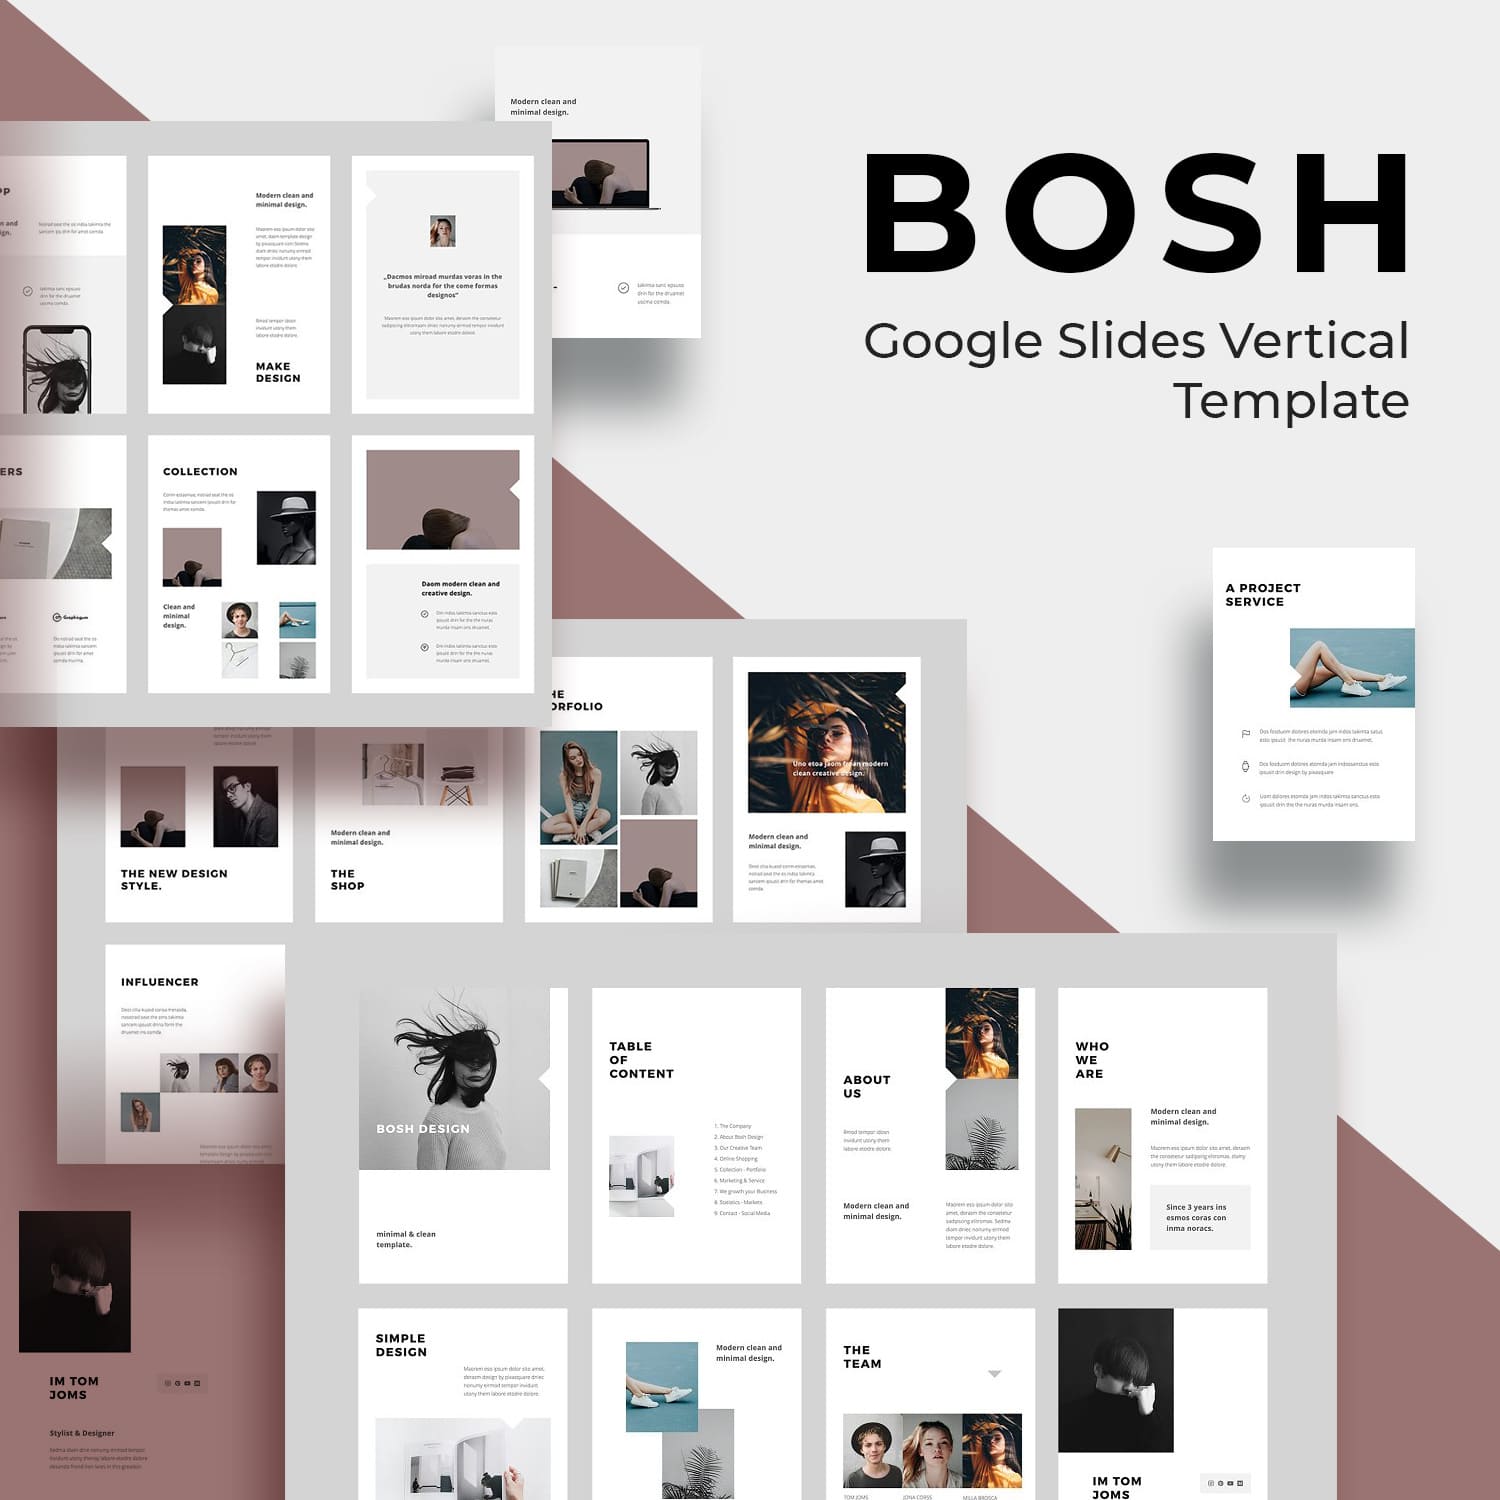 BOSH Google Slides Vertical Template by MasterBundles.